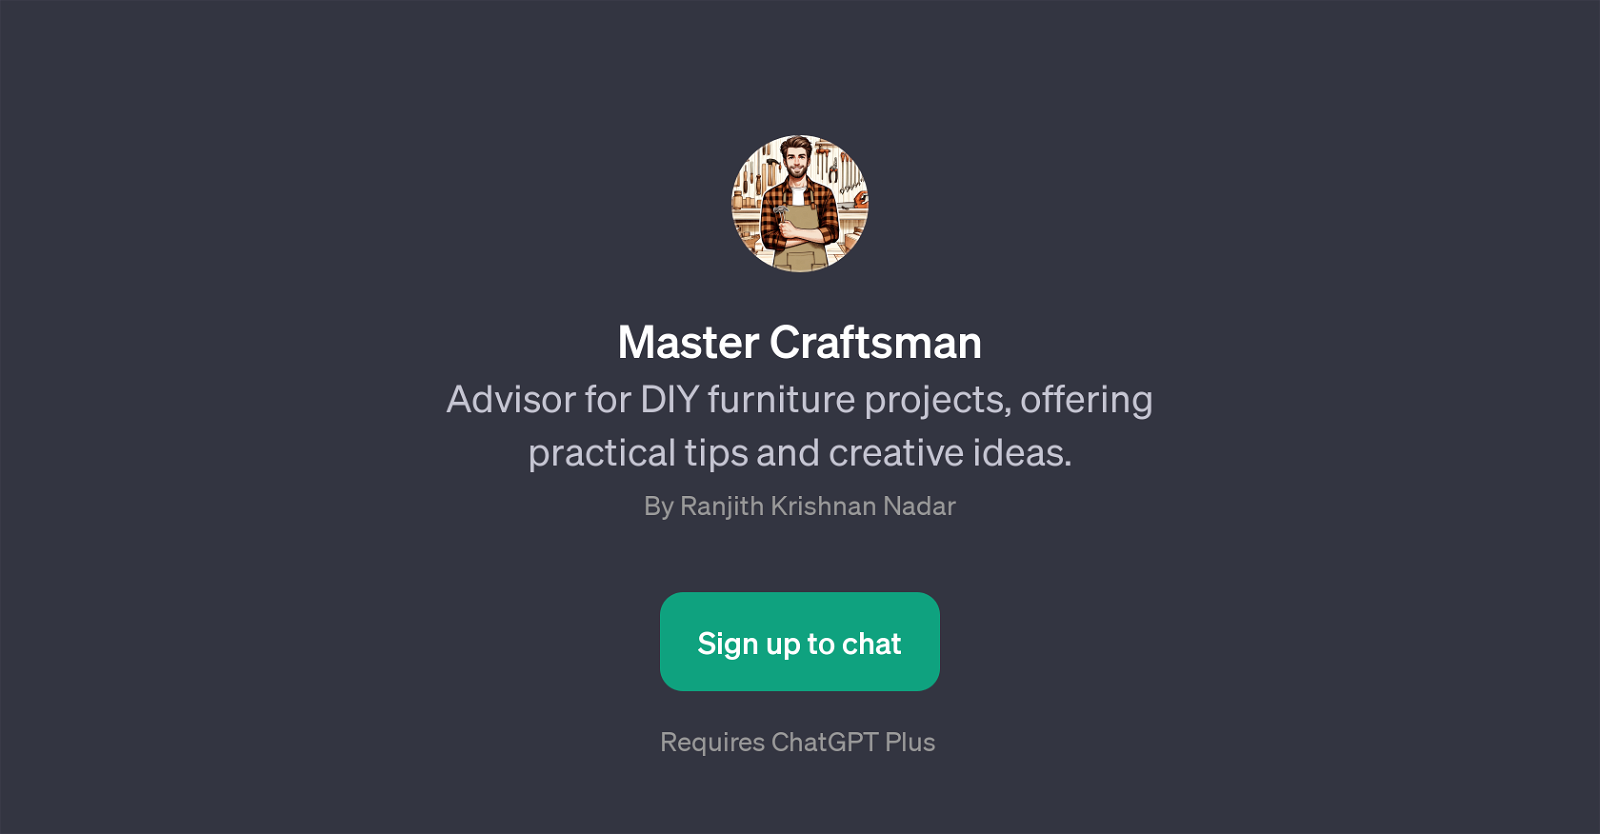 Master Craftsman website